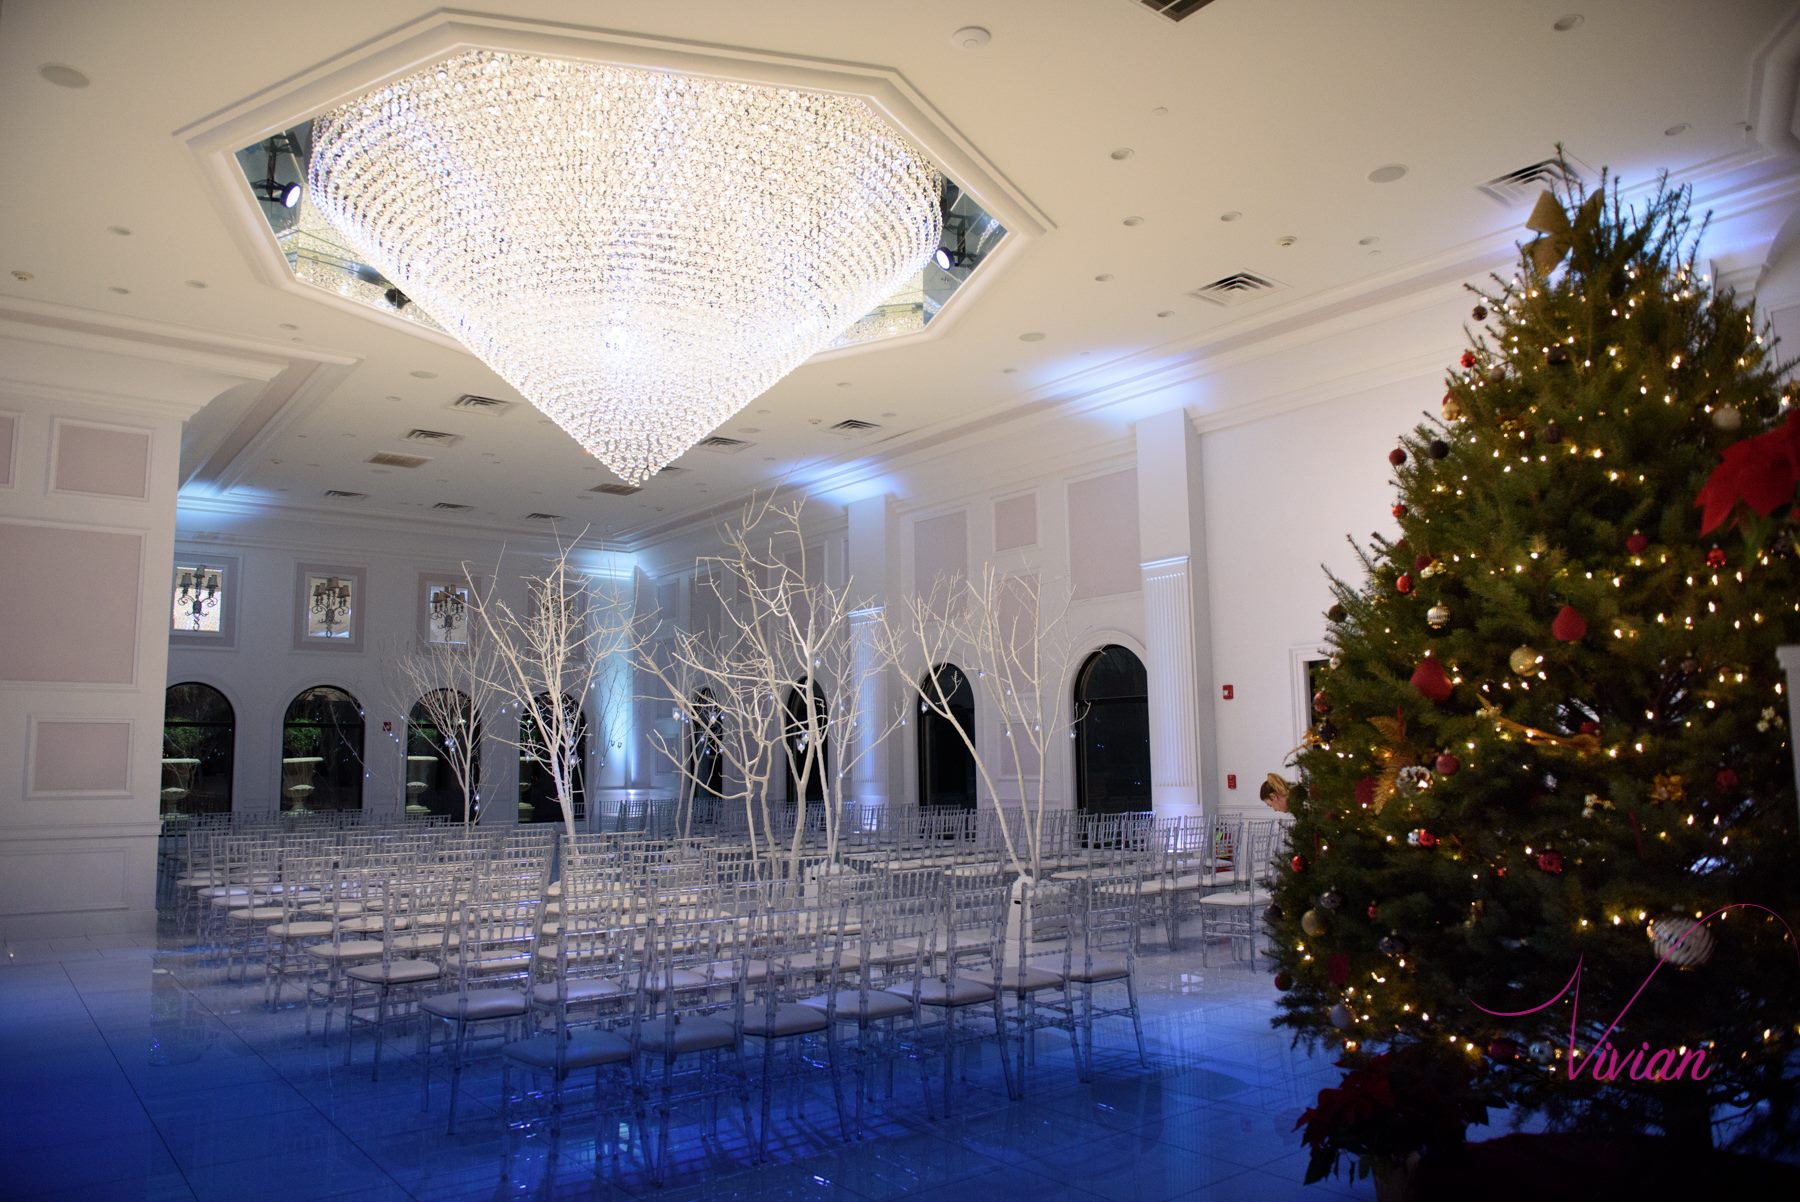 giant-chandelier-winter-wonderland-wedding-venue.jpg